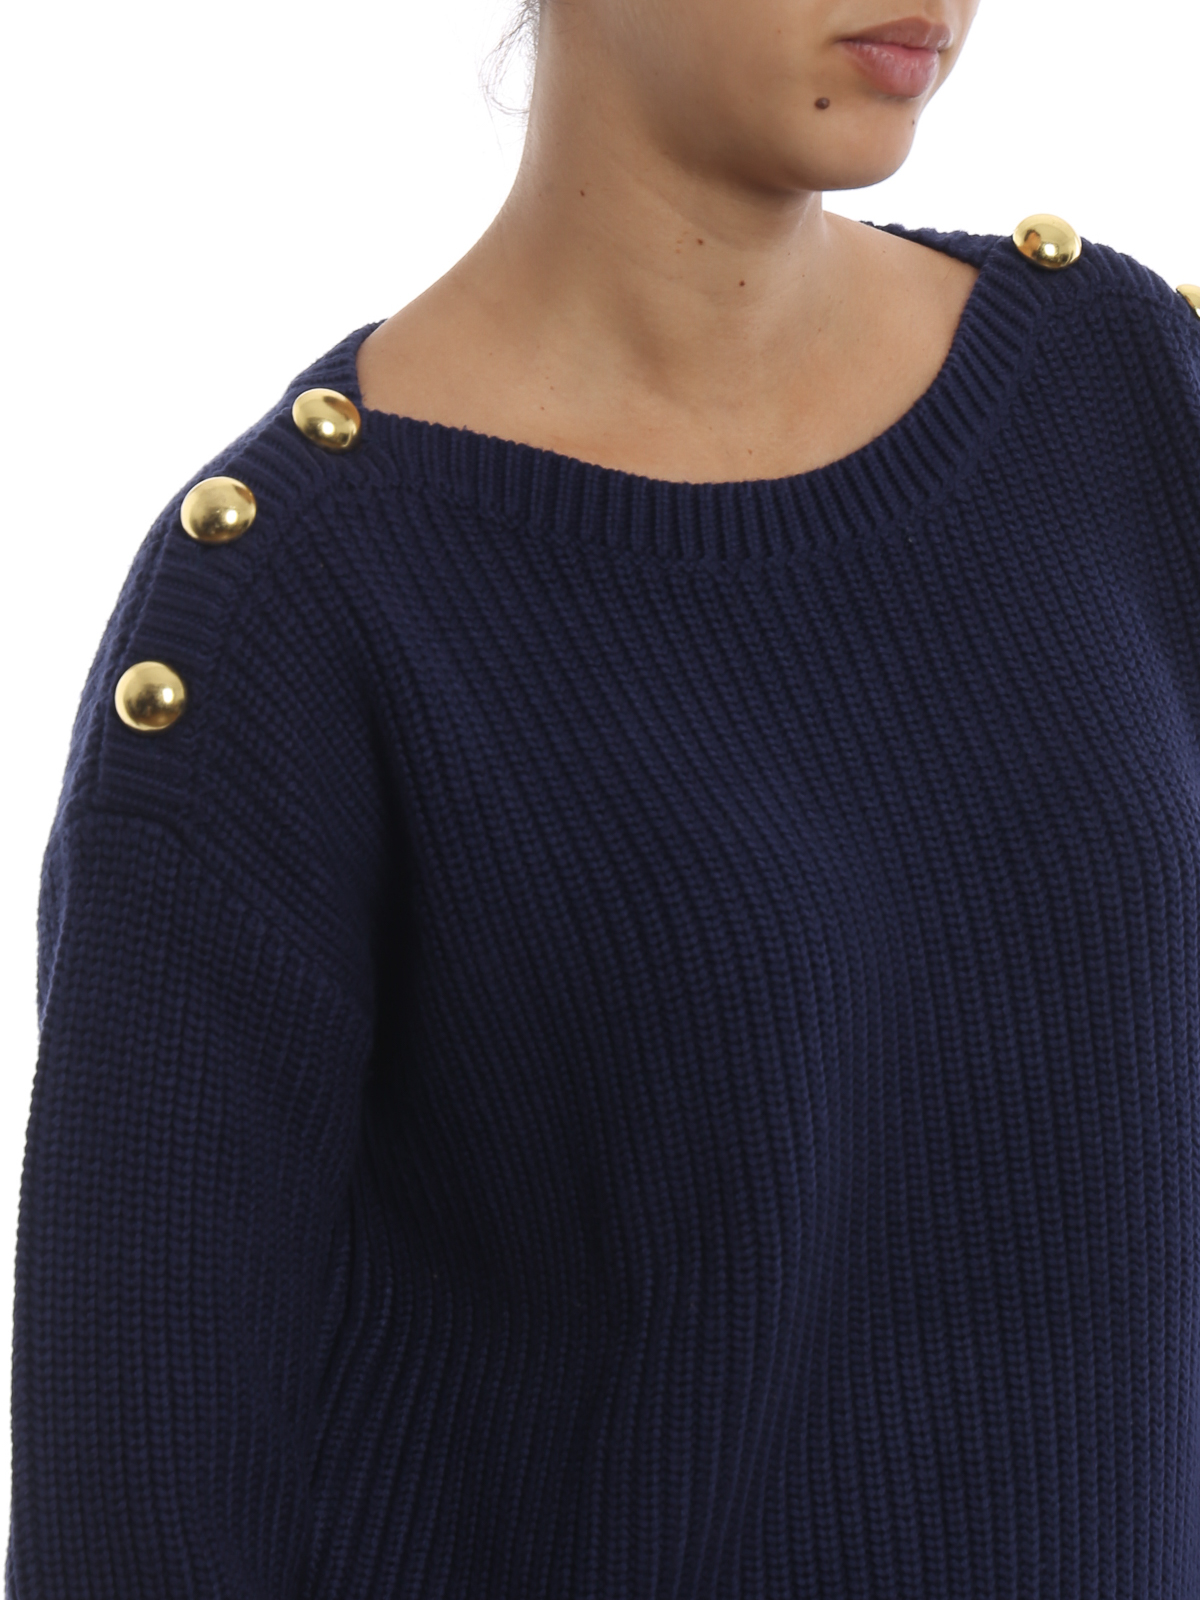 michael kors blue sweater